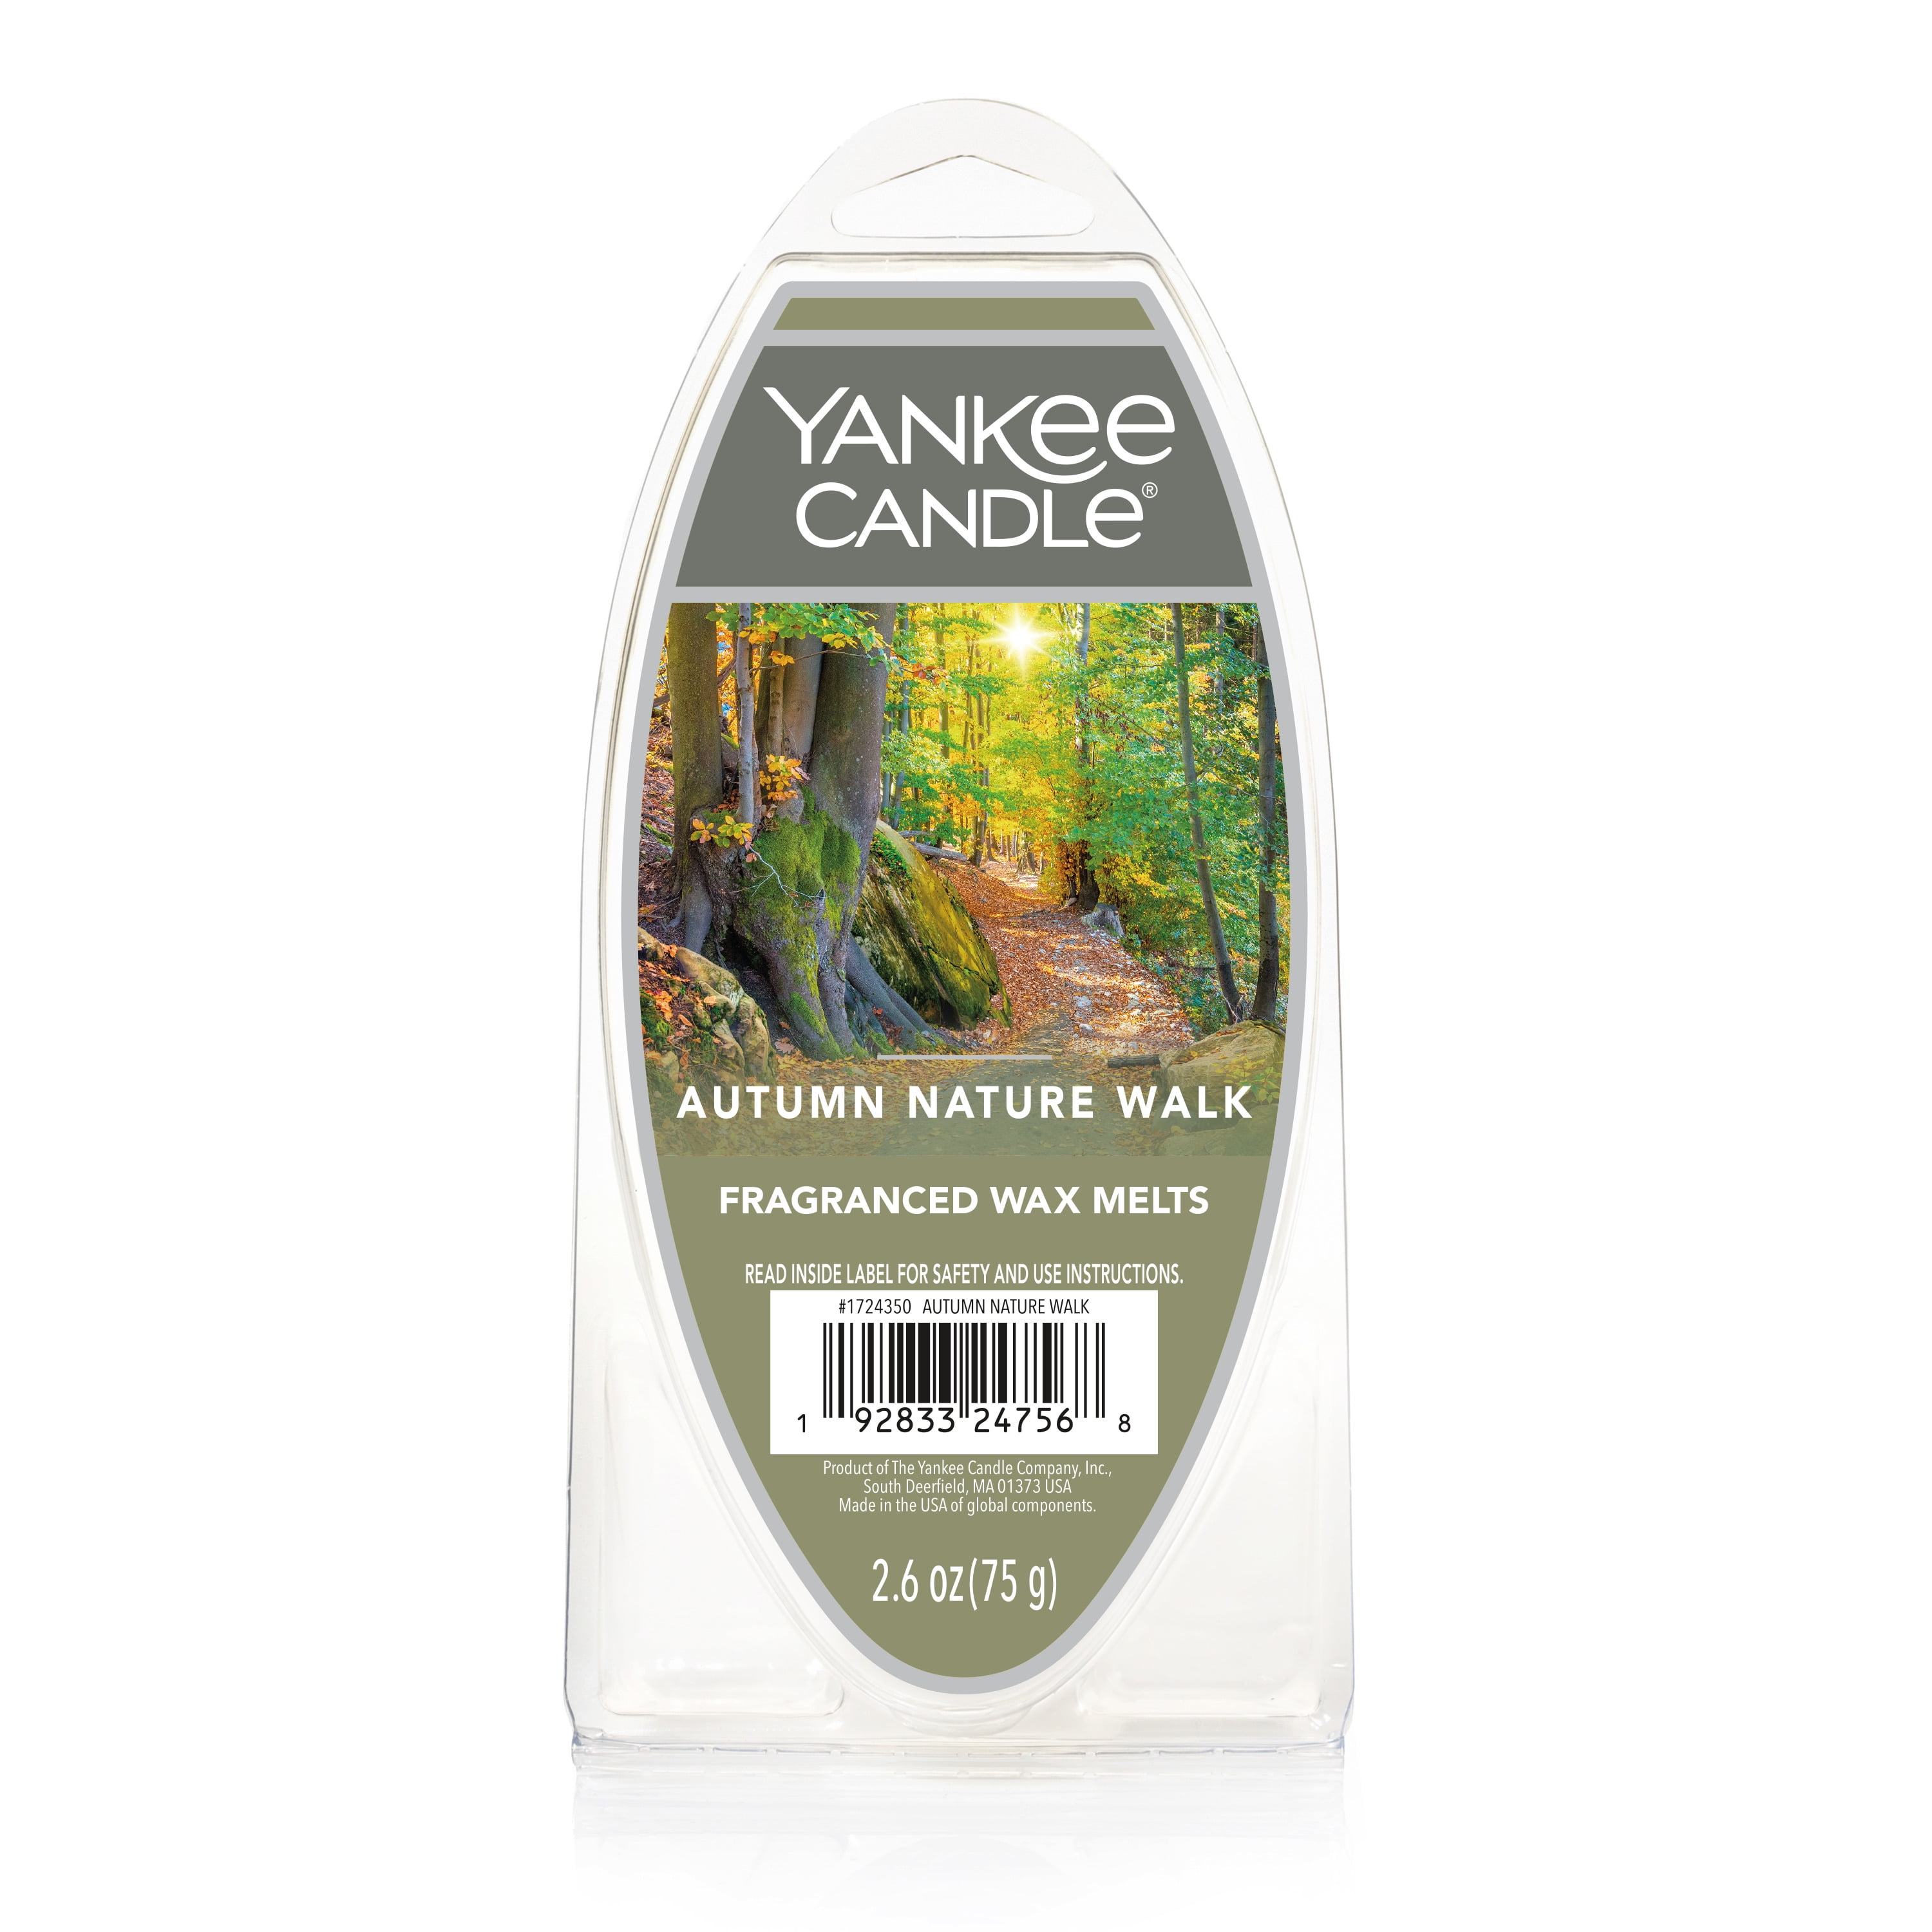 Yankee Candle Wax Melts Reviews from Walmart - Fall 2018 https